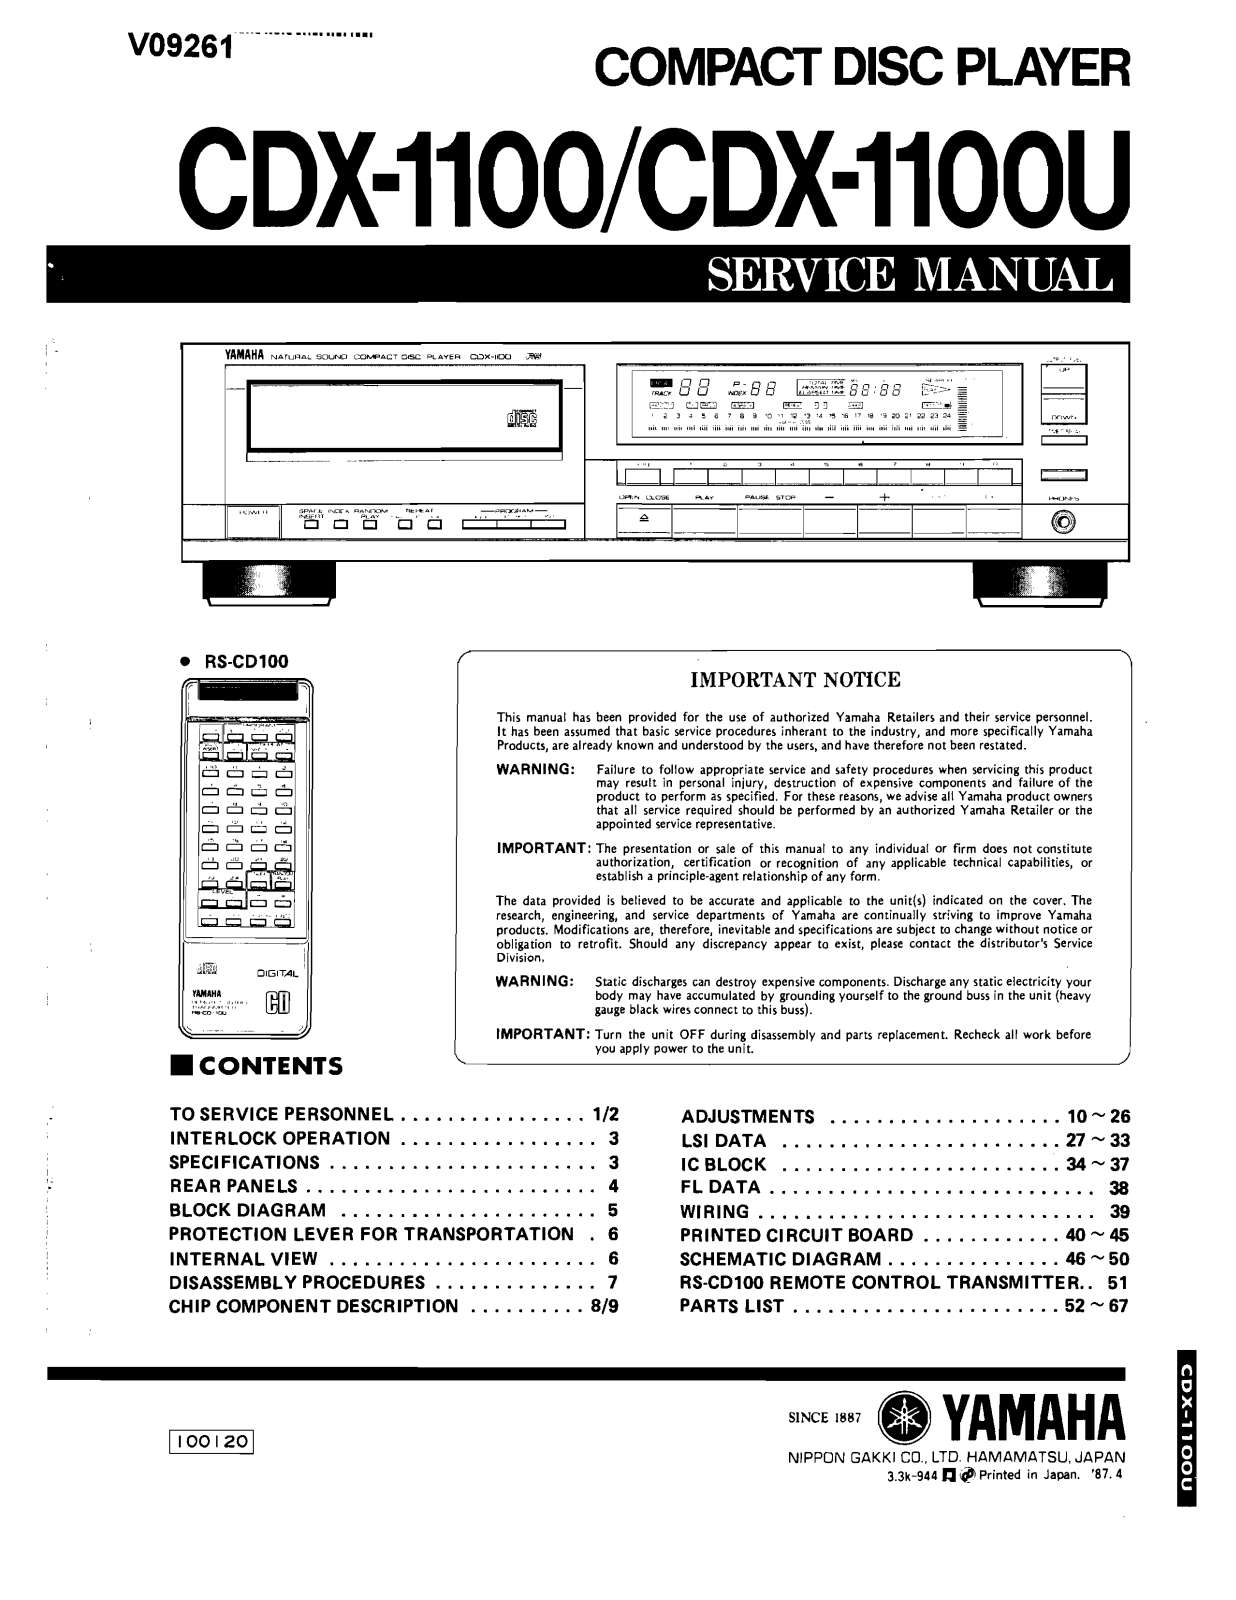 Yamaha CDX-1100 Service Manual